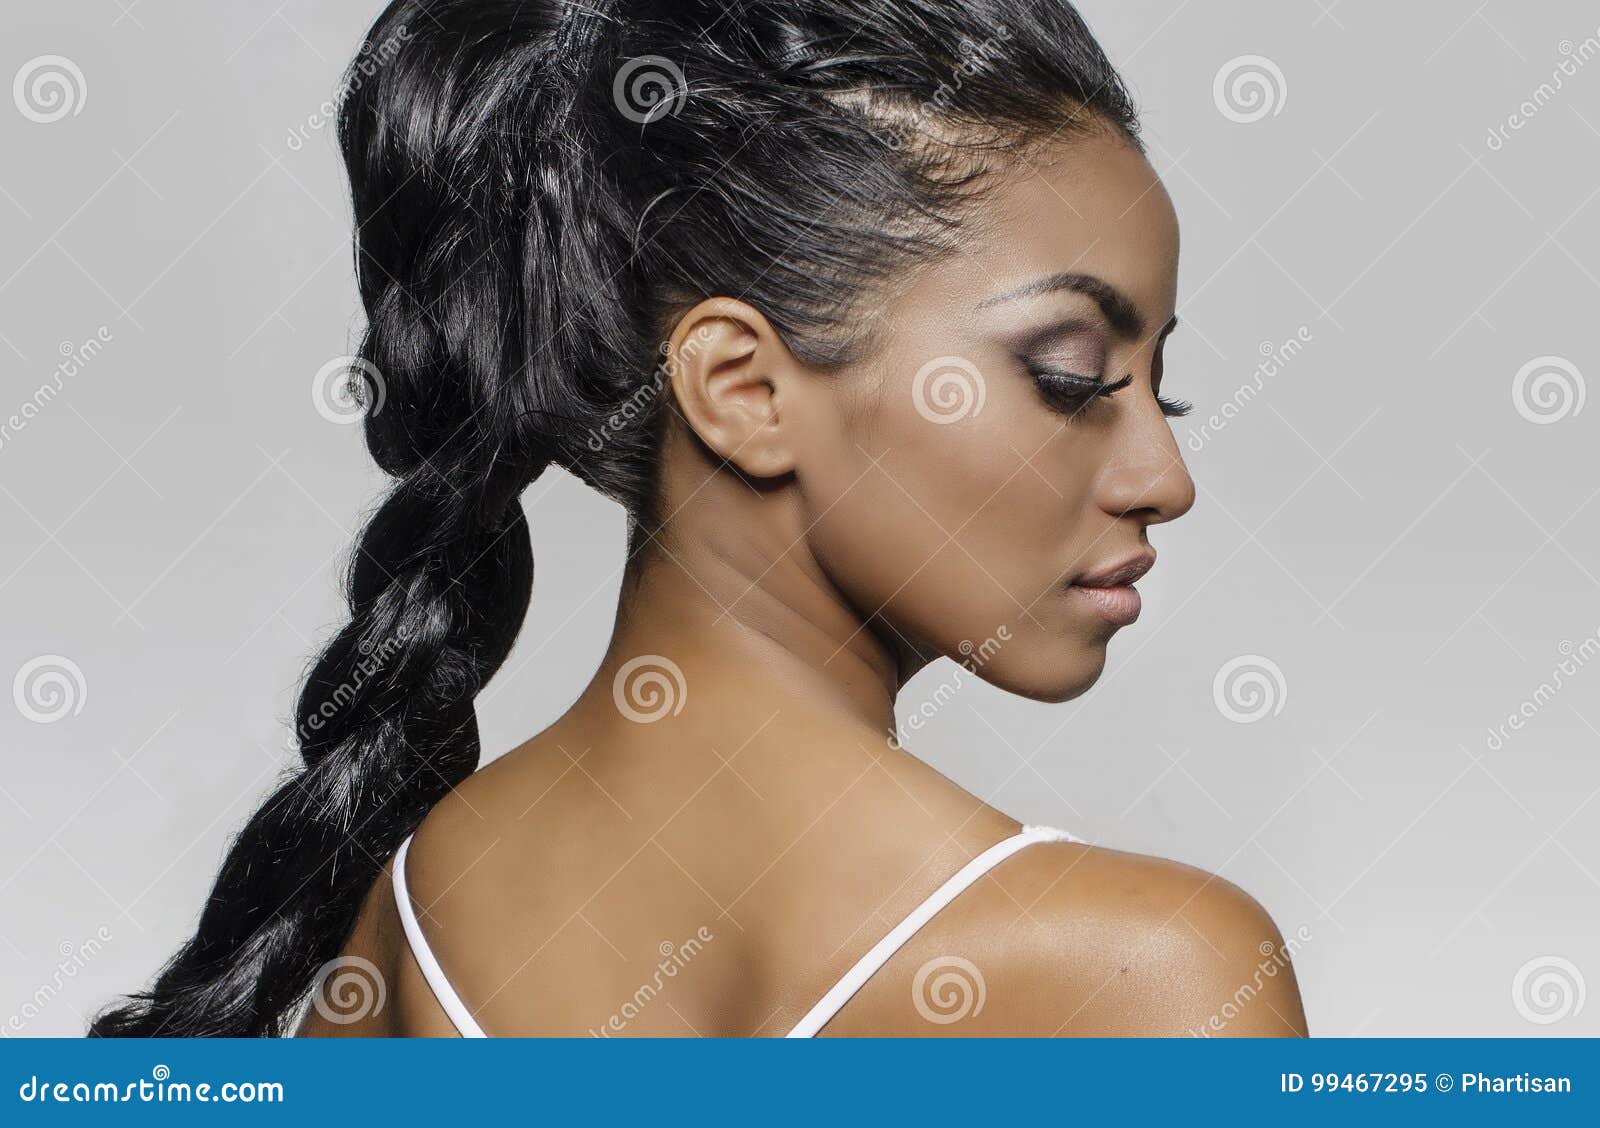 beautiful exotic woman braided hair